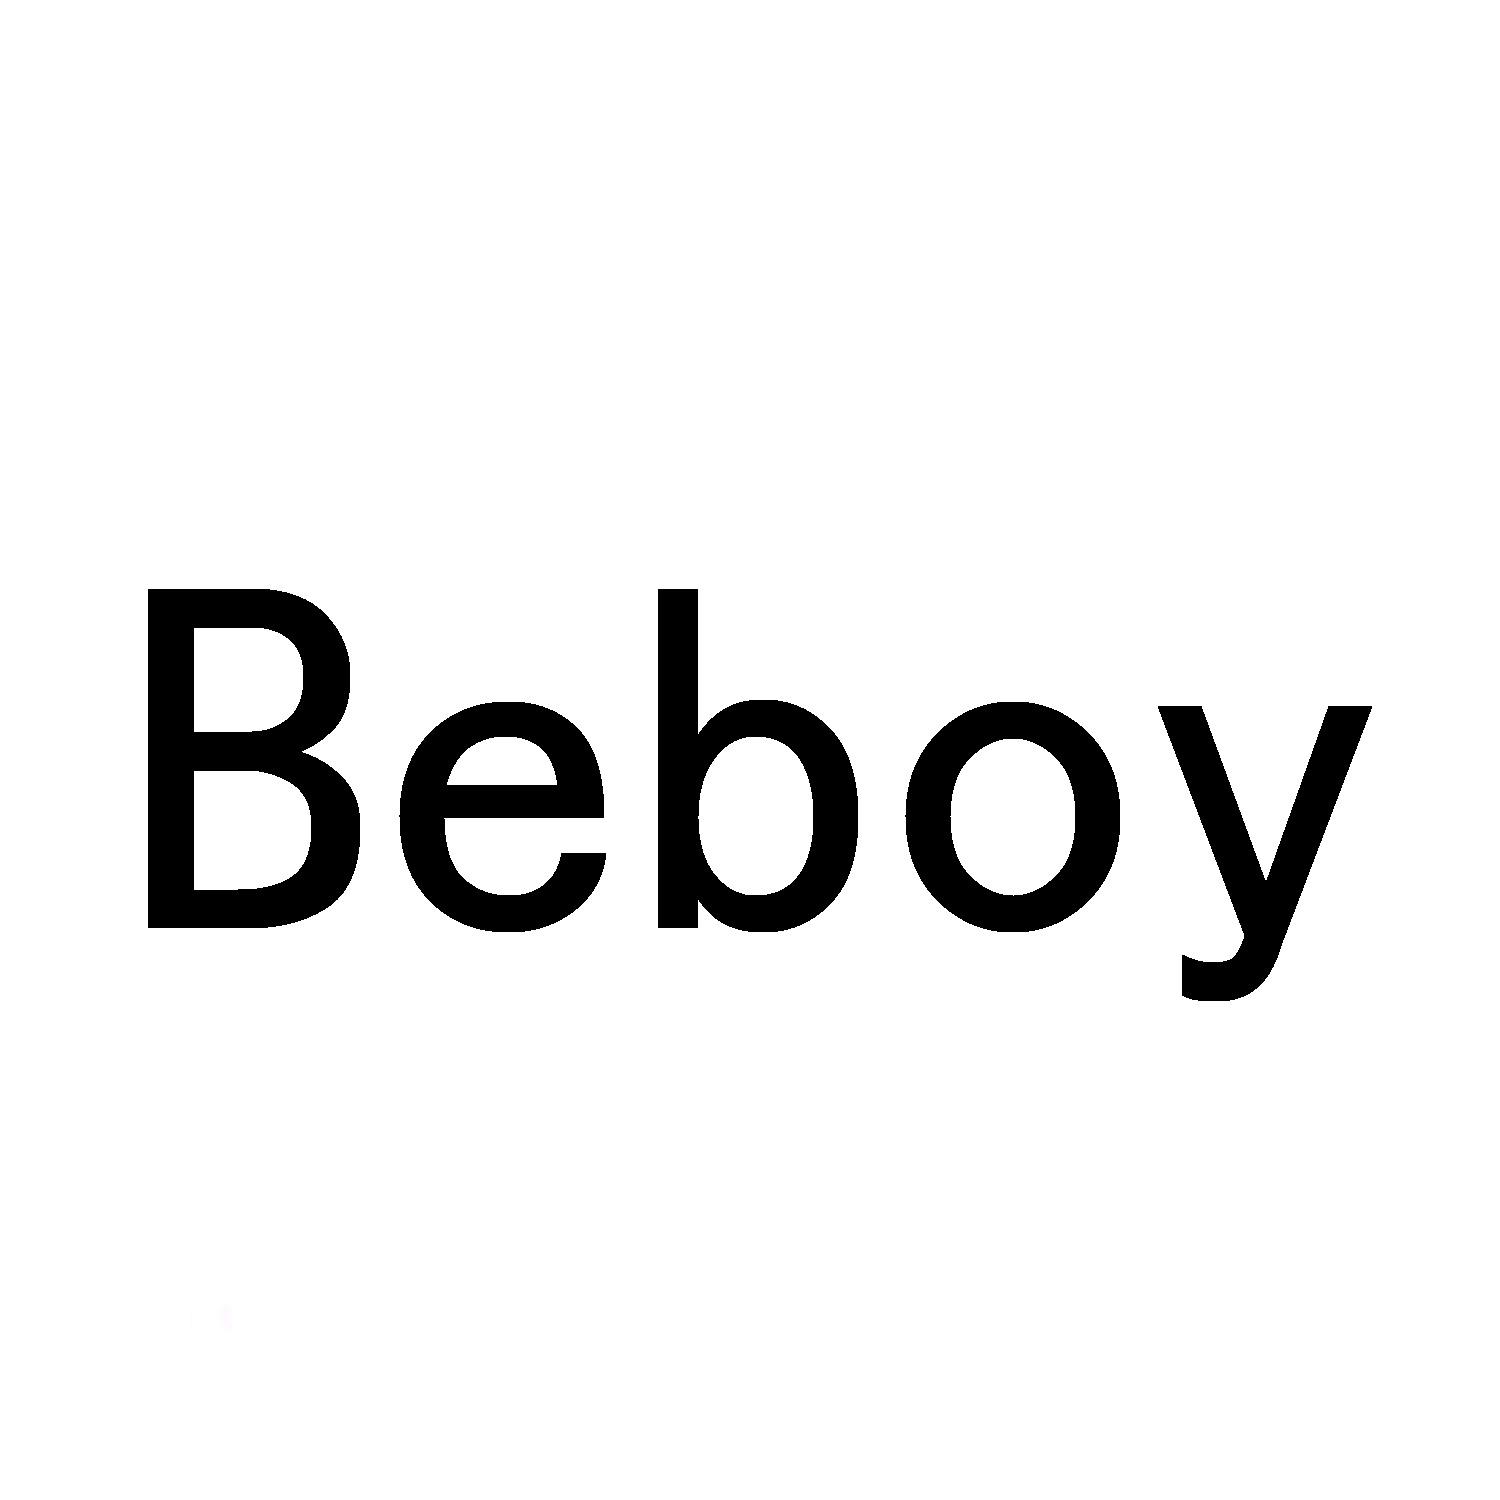 BEBOY